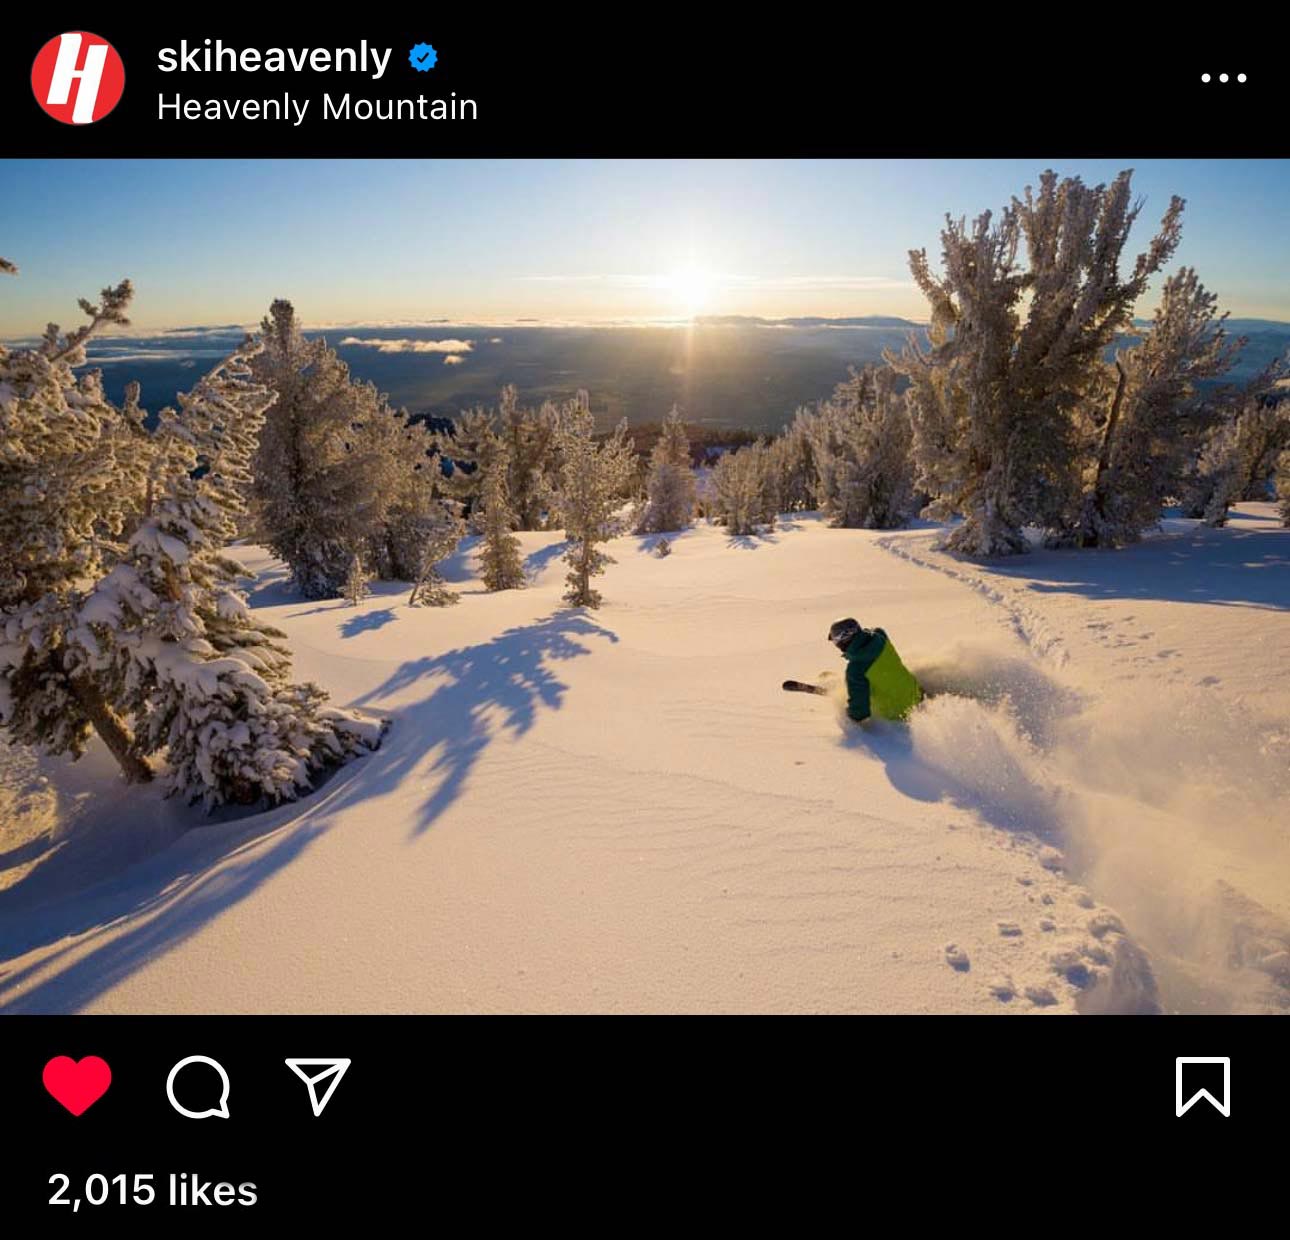 Skiing at Heavenly Ski Resort shared on Instagram.